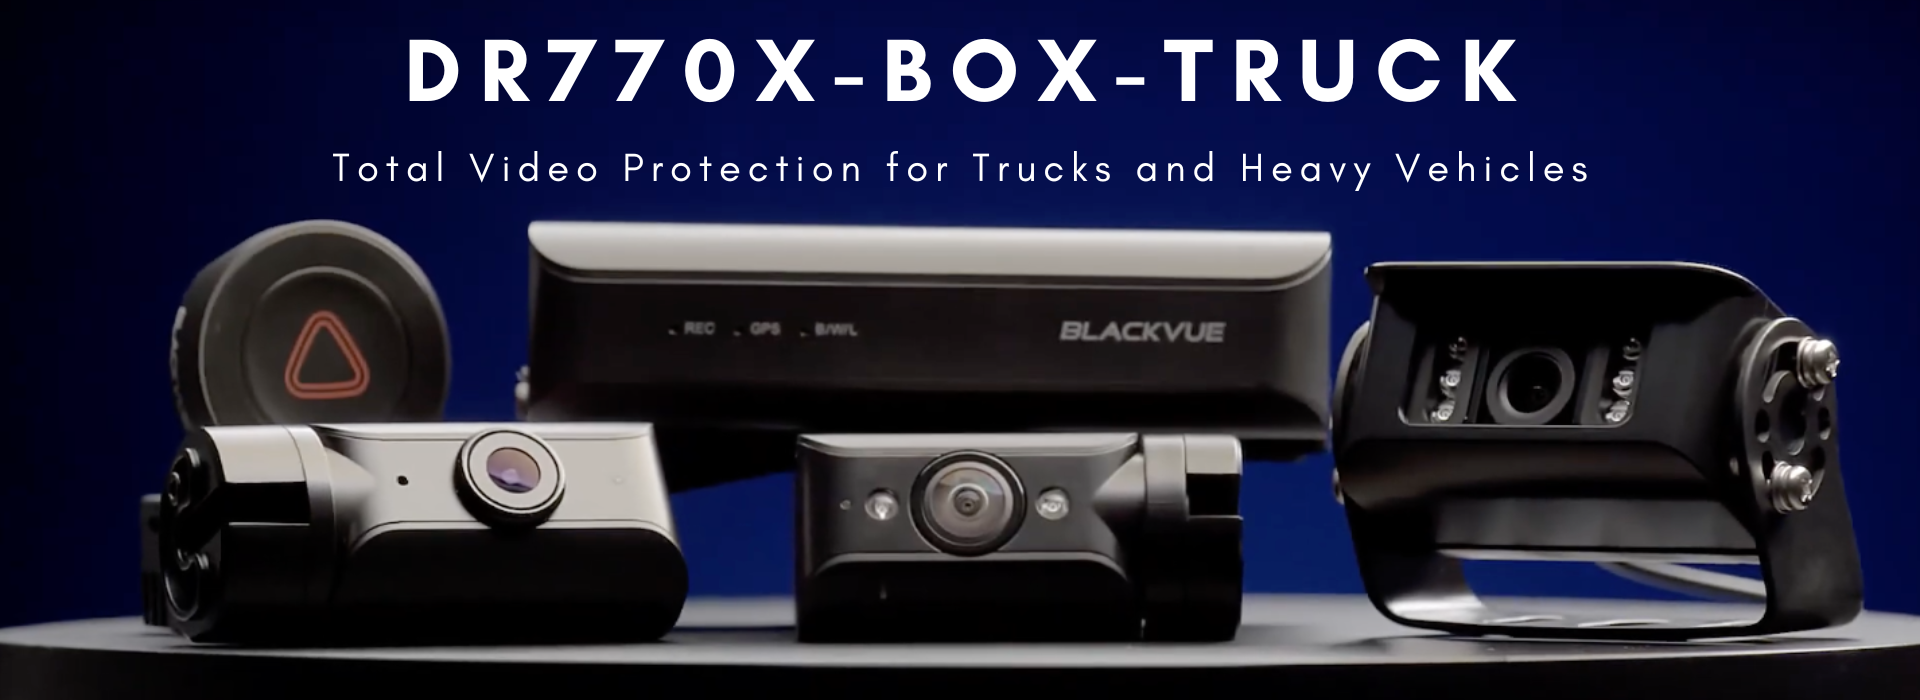 BlackVue DR770X-BOX-TRUCK | The DR770X-BOX-TRUCK Banner